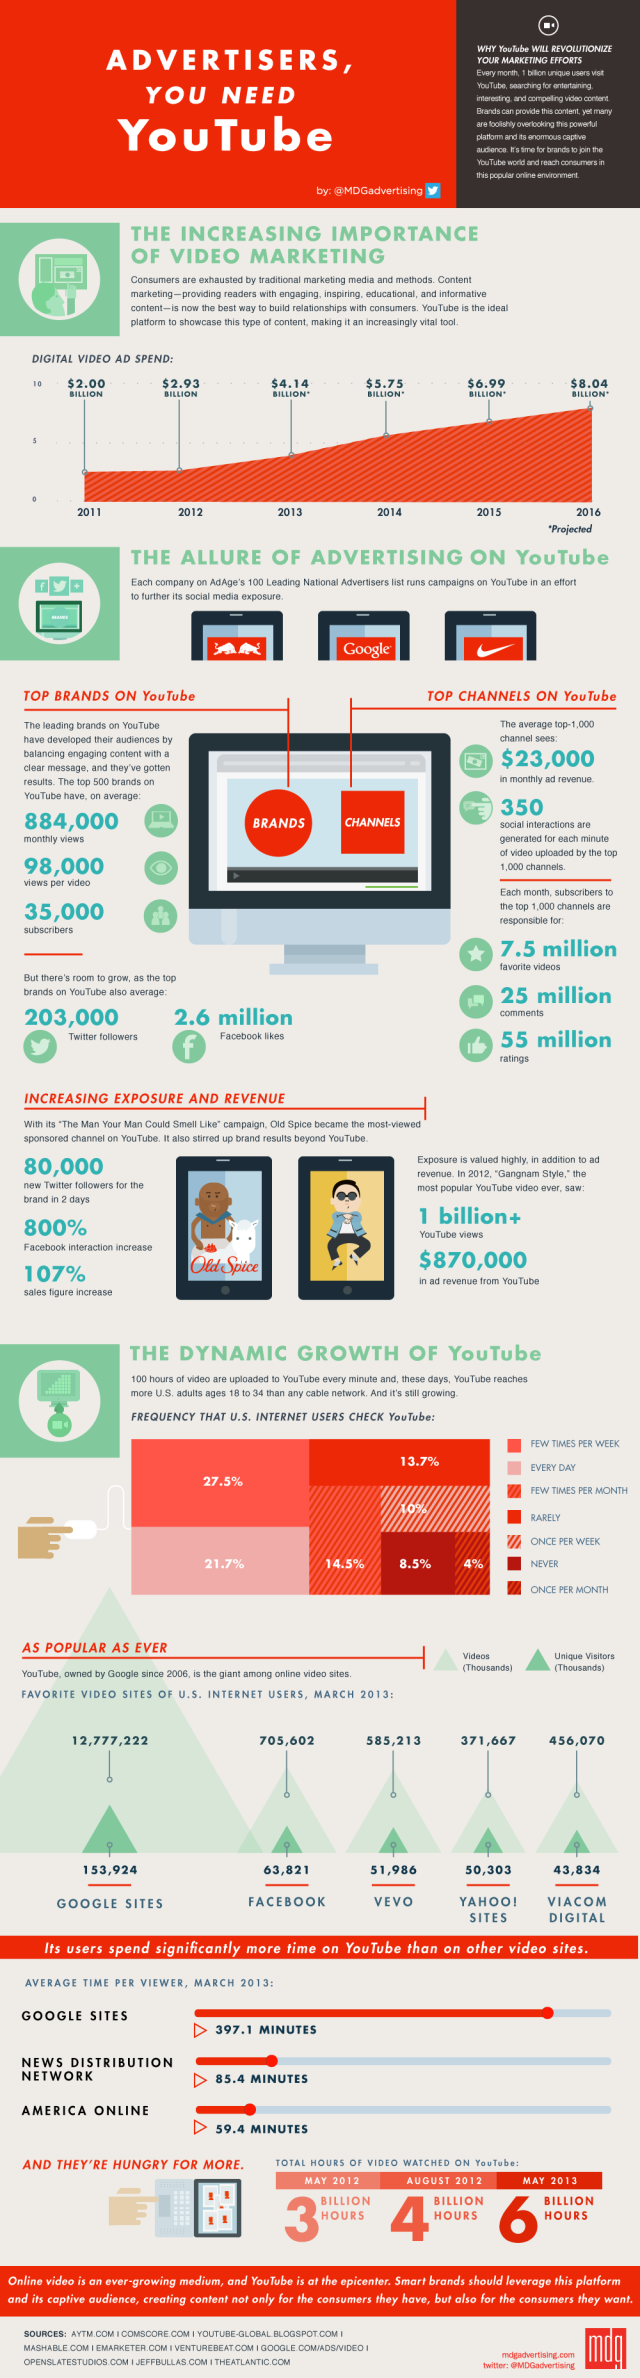 infographic-advertisers-you-need-youtube-1000